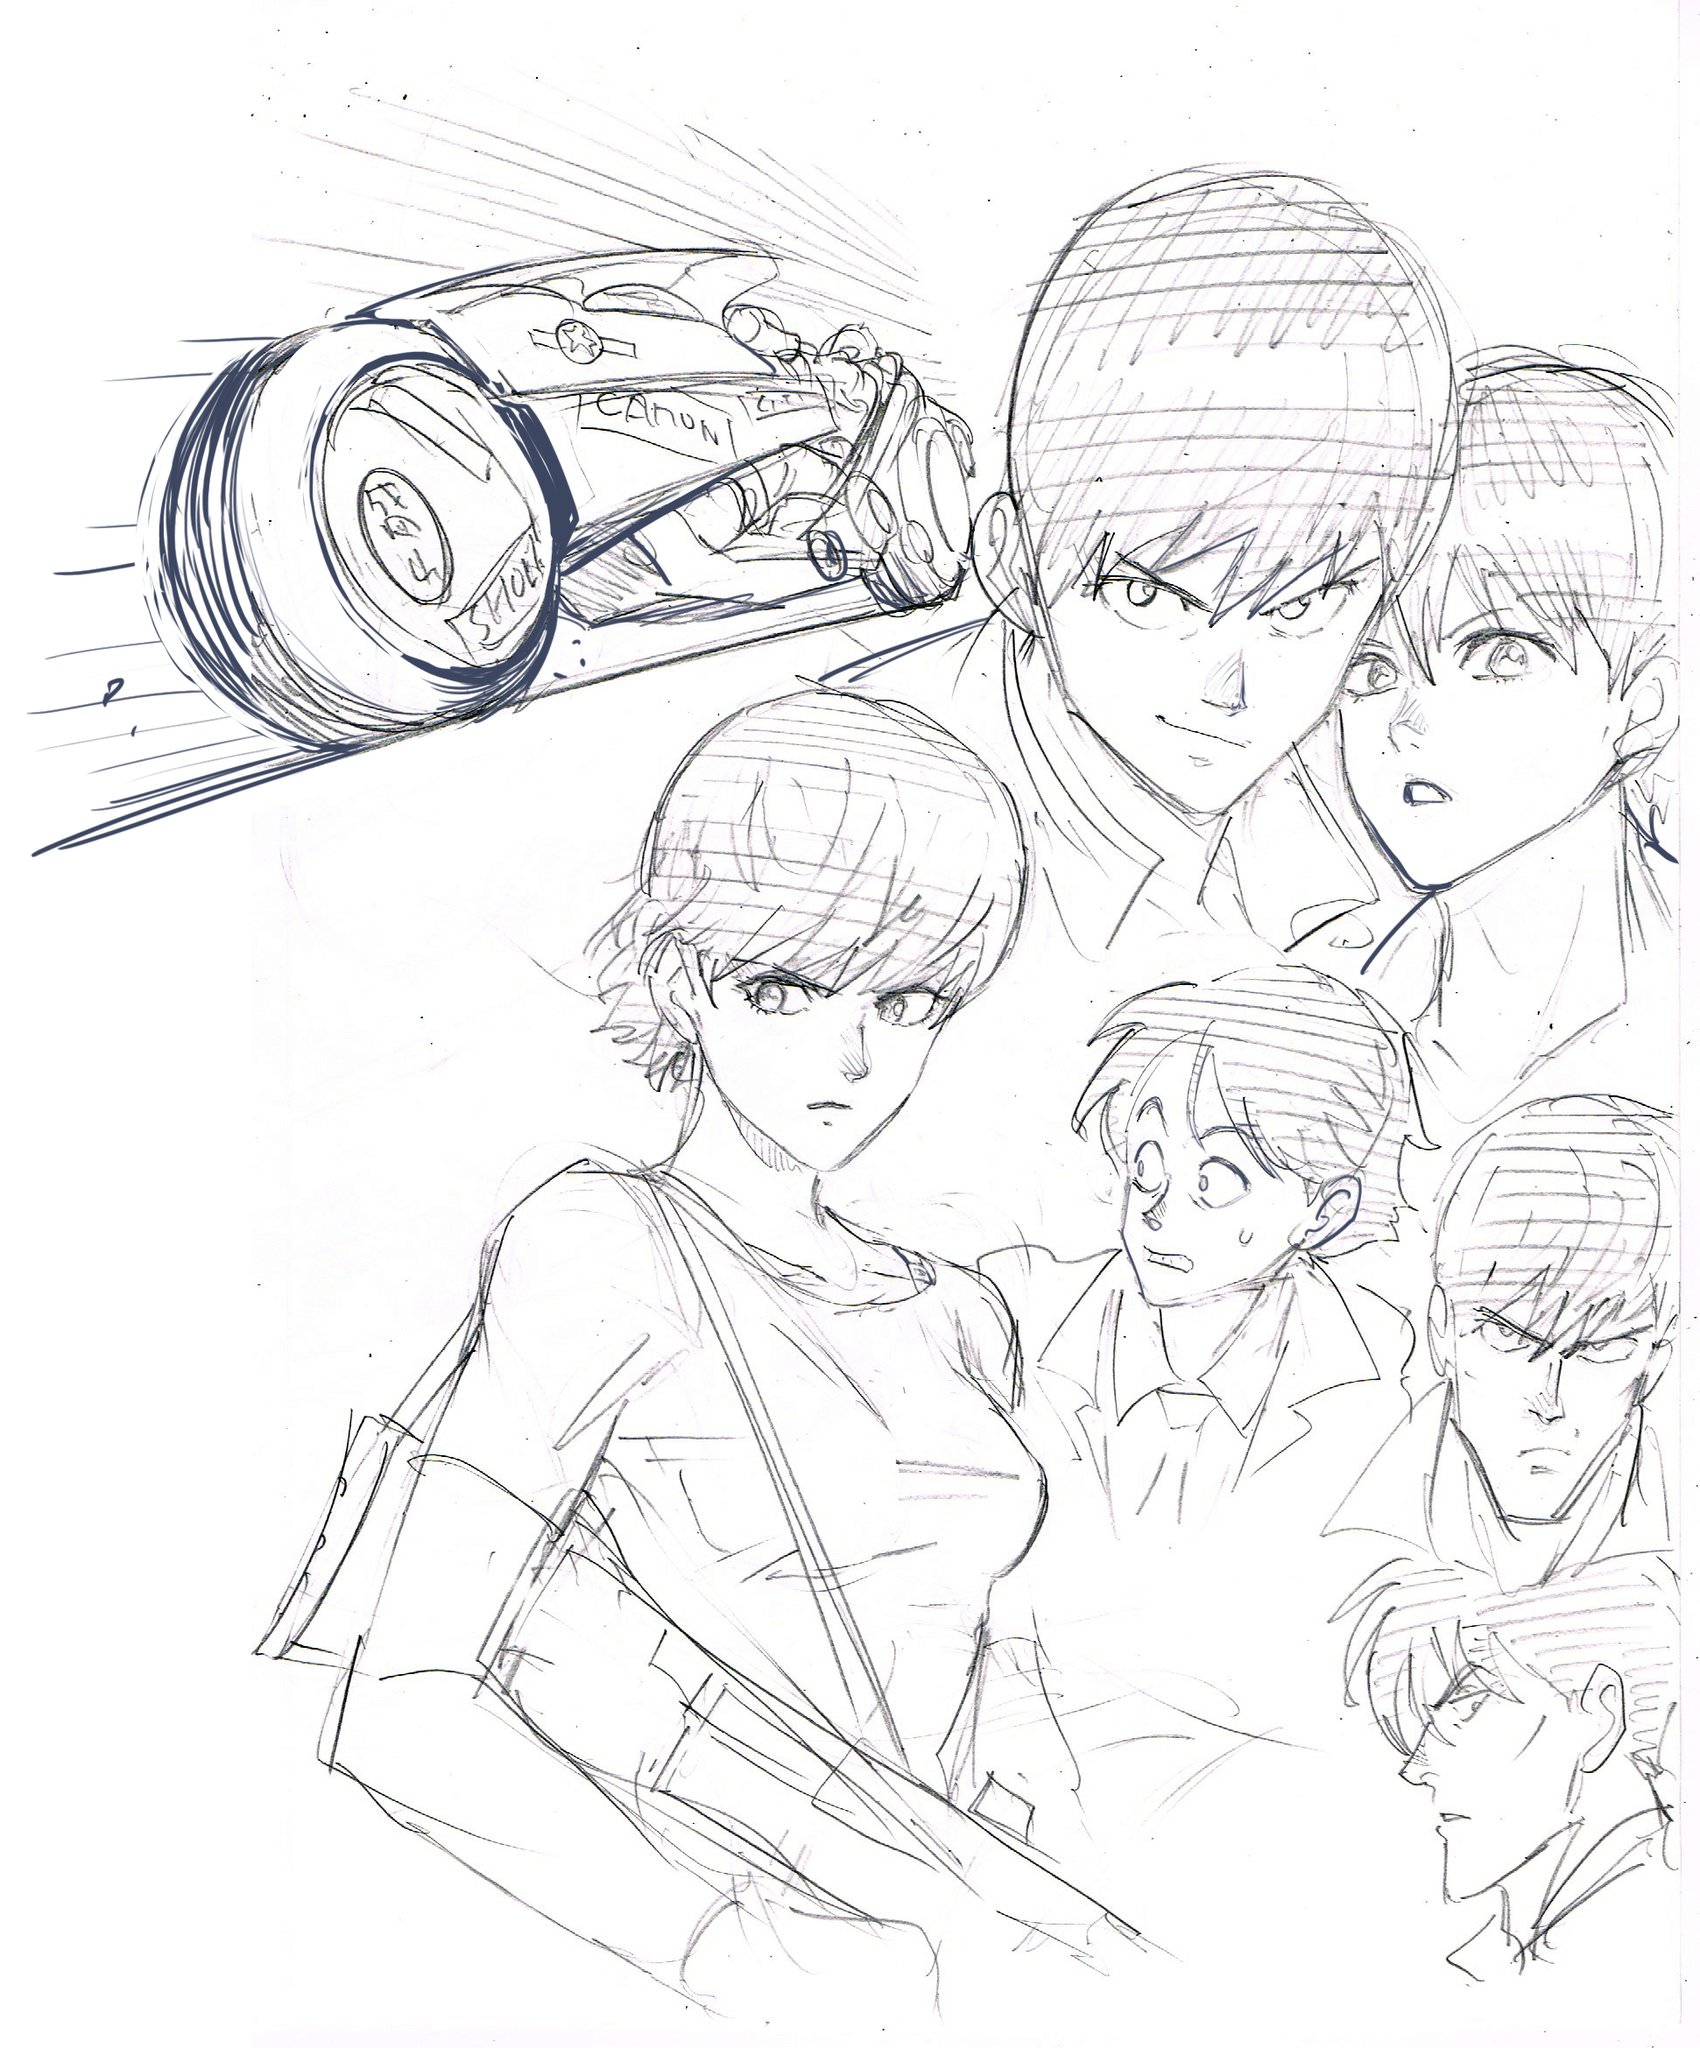 New Akira sketch by Yusuke Murata 